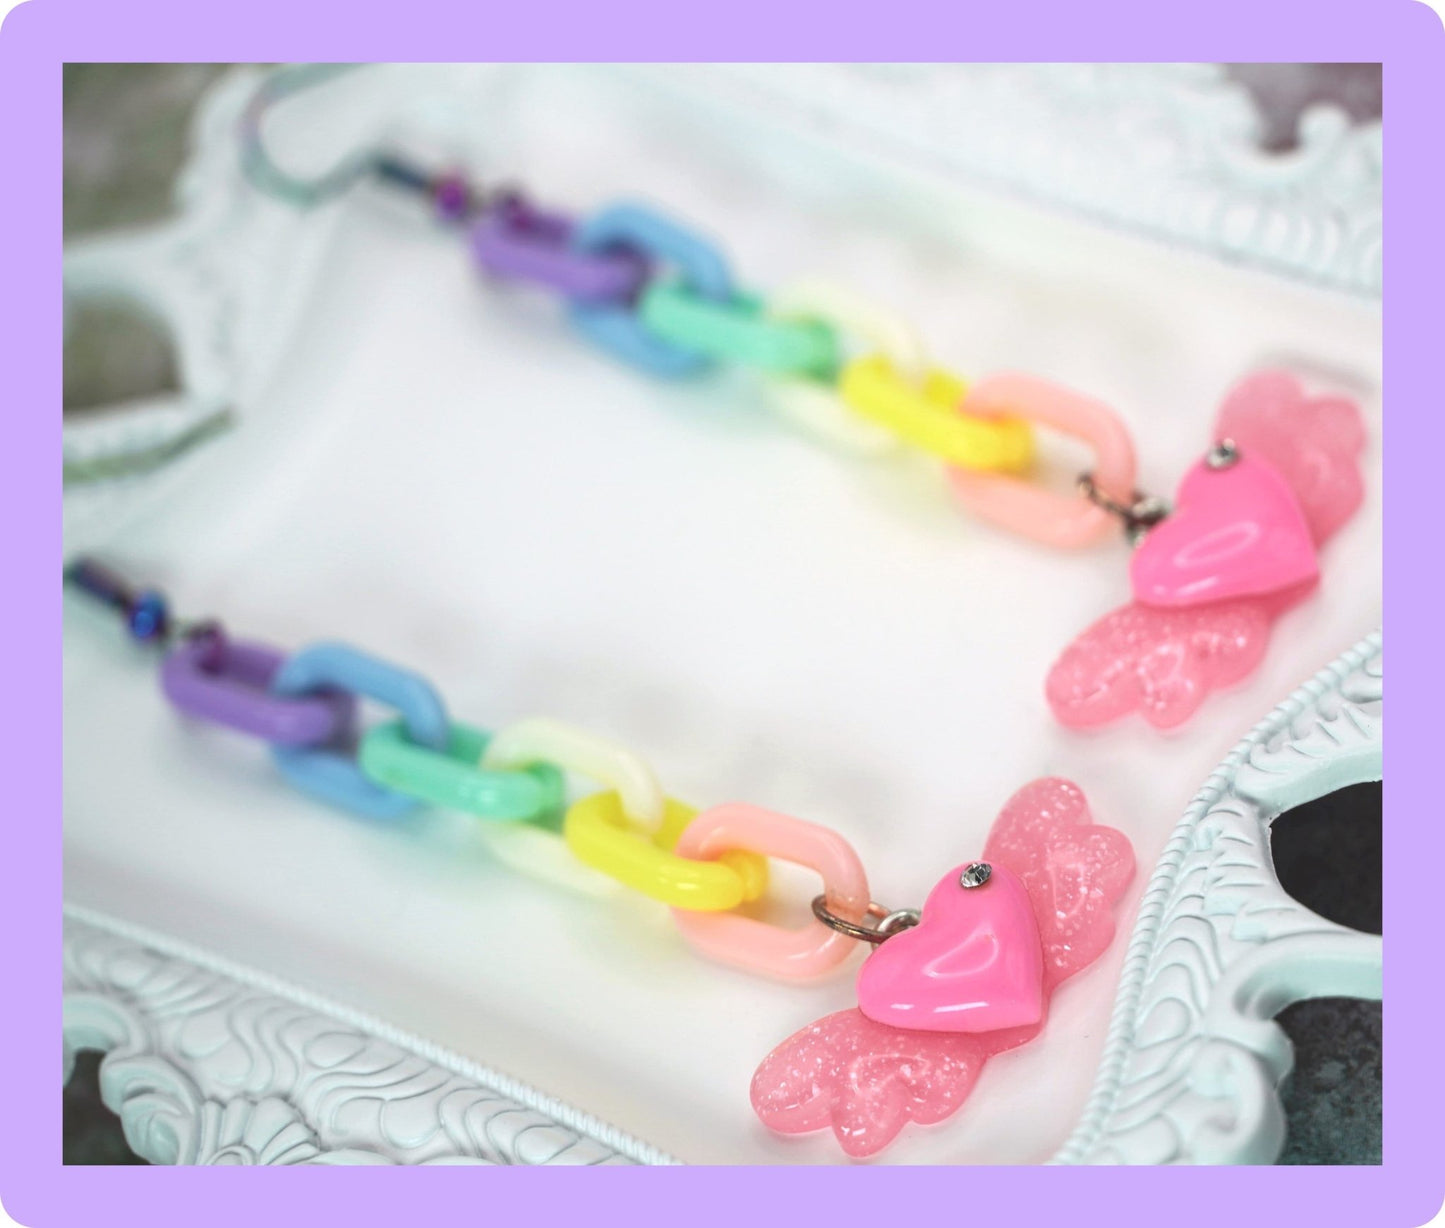 Magic Girl Japan Inspired Earrings with Pastel Rainbow Chains, y2k Harajuku Earrings, Pastel Decora Kei Earrings, Kawaii Pink Heart Wings - Dekowaii Jewelry Company